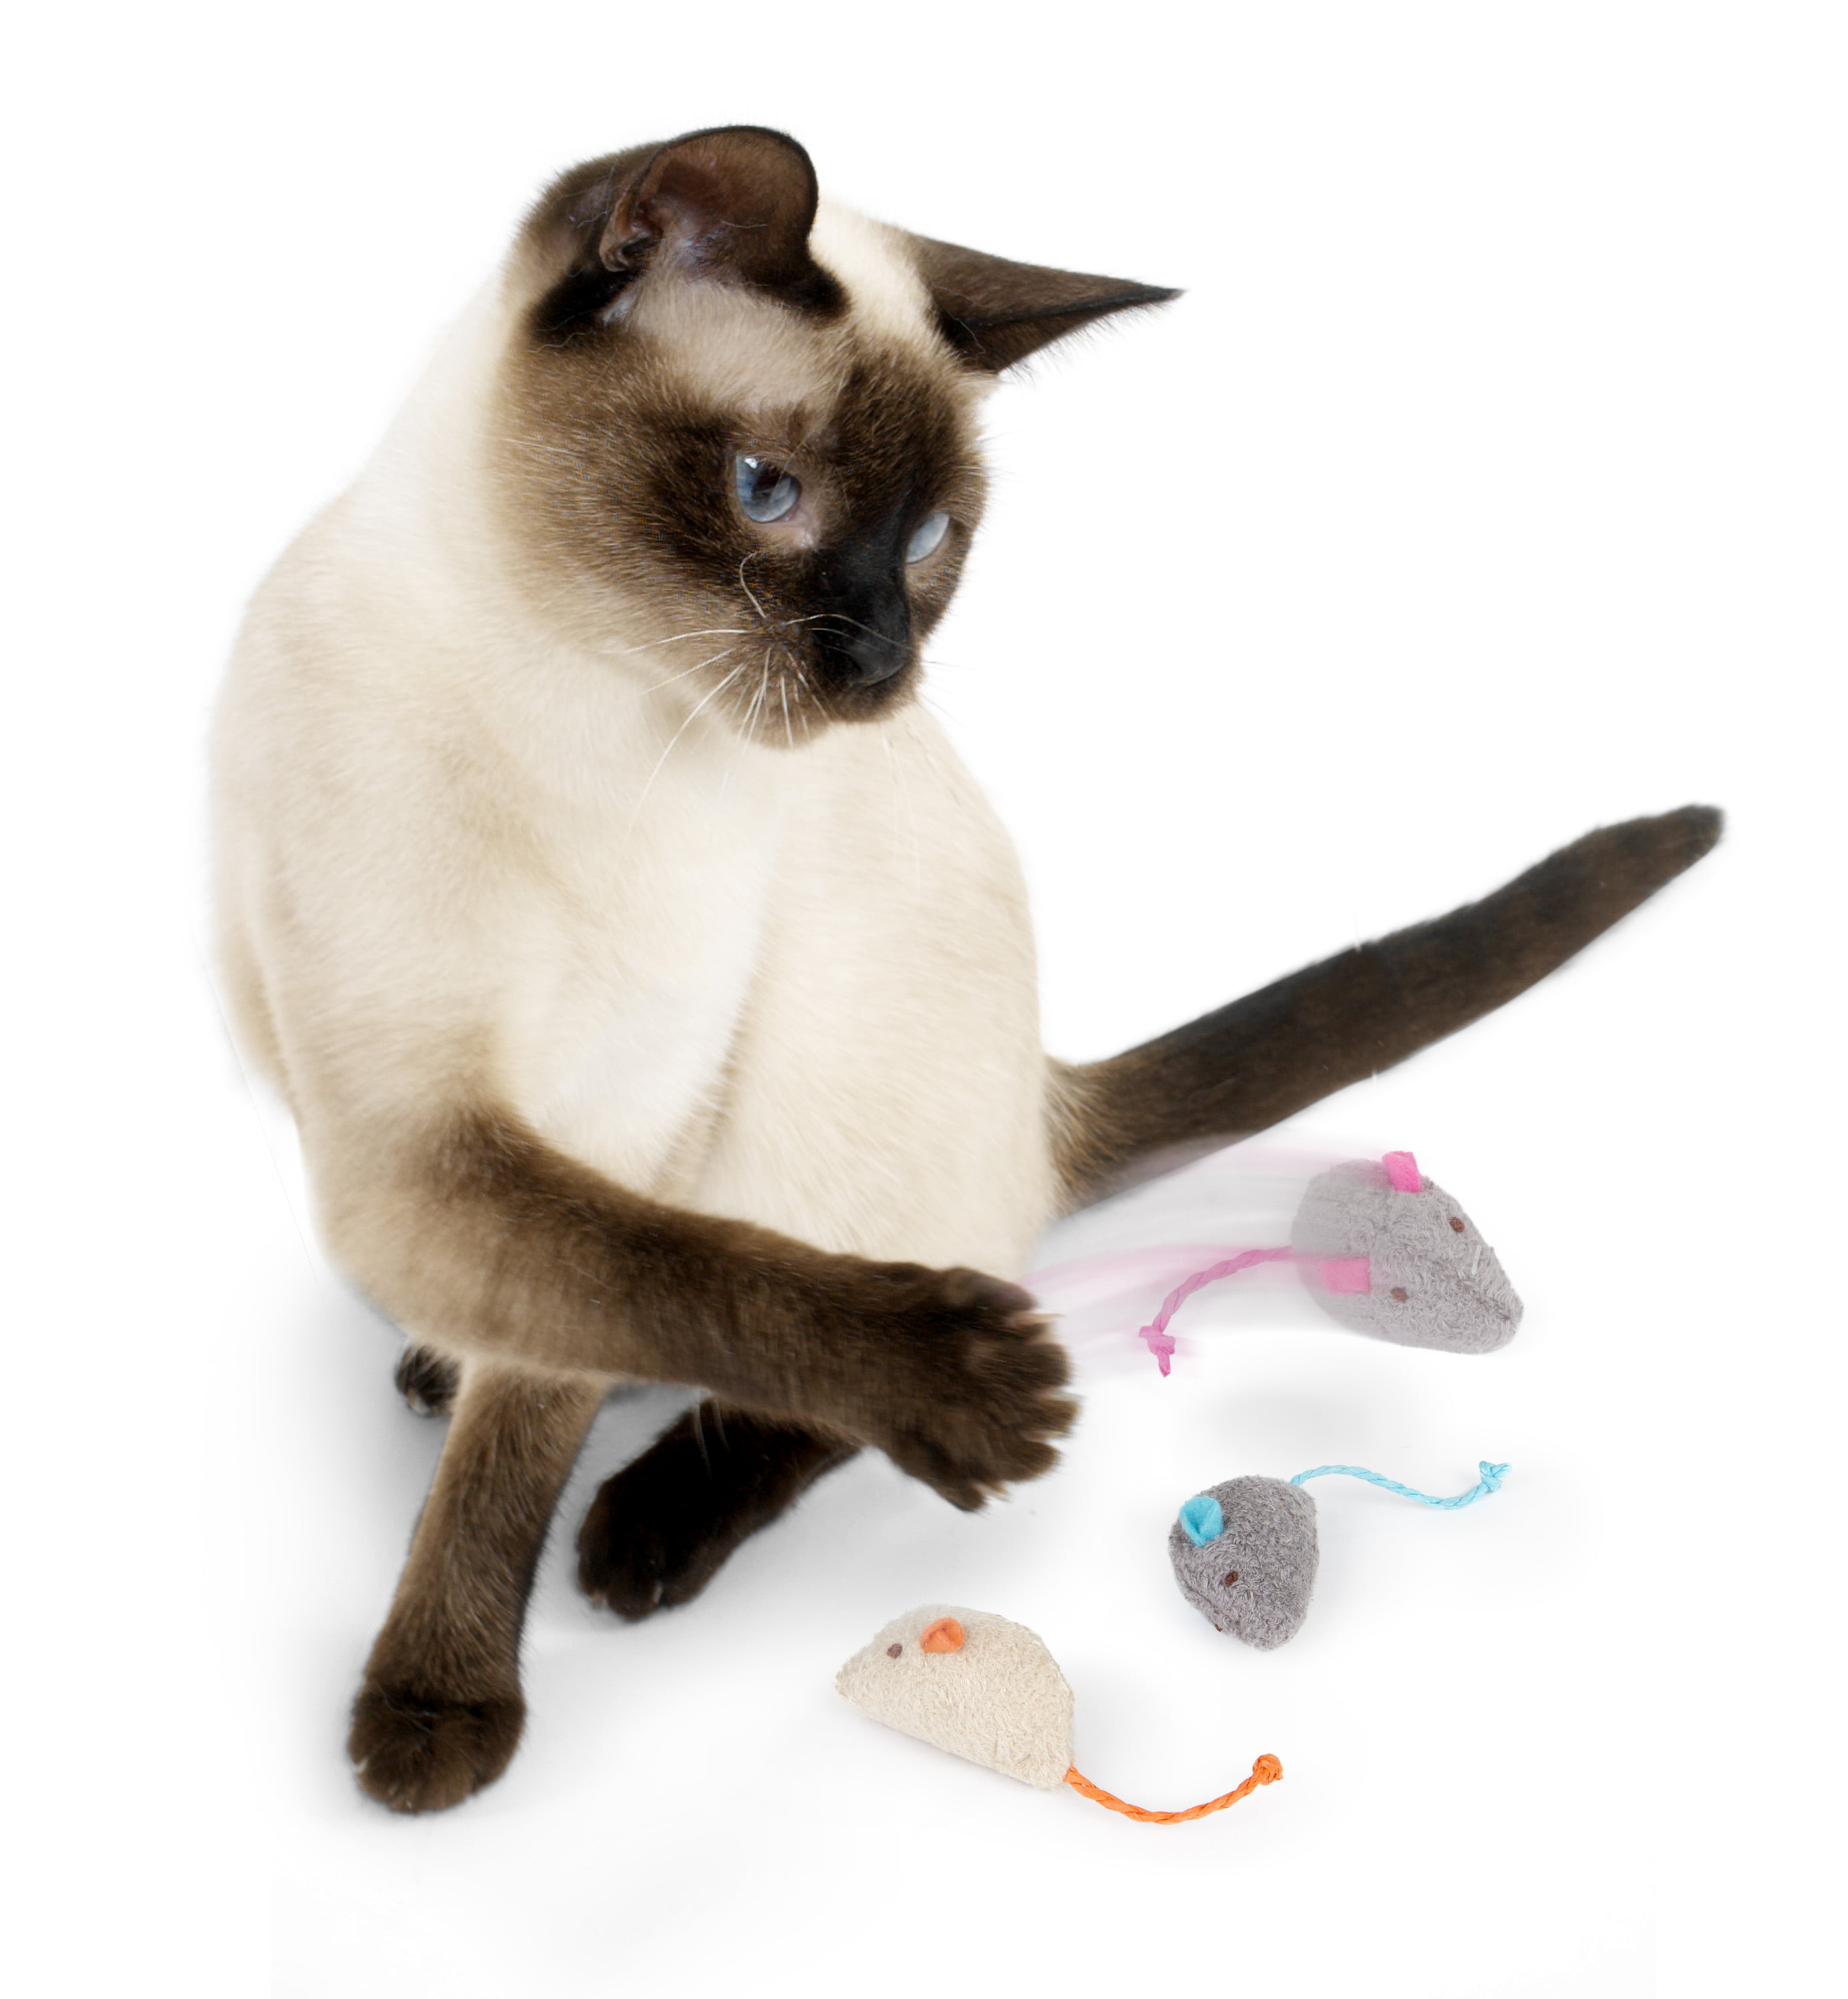 SmartyKat Skitter Critters 3-PACK Mice Catnip Cat Kitten Mouse Toys